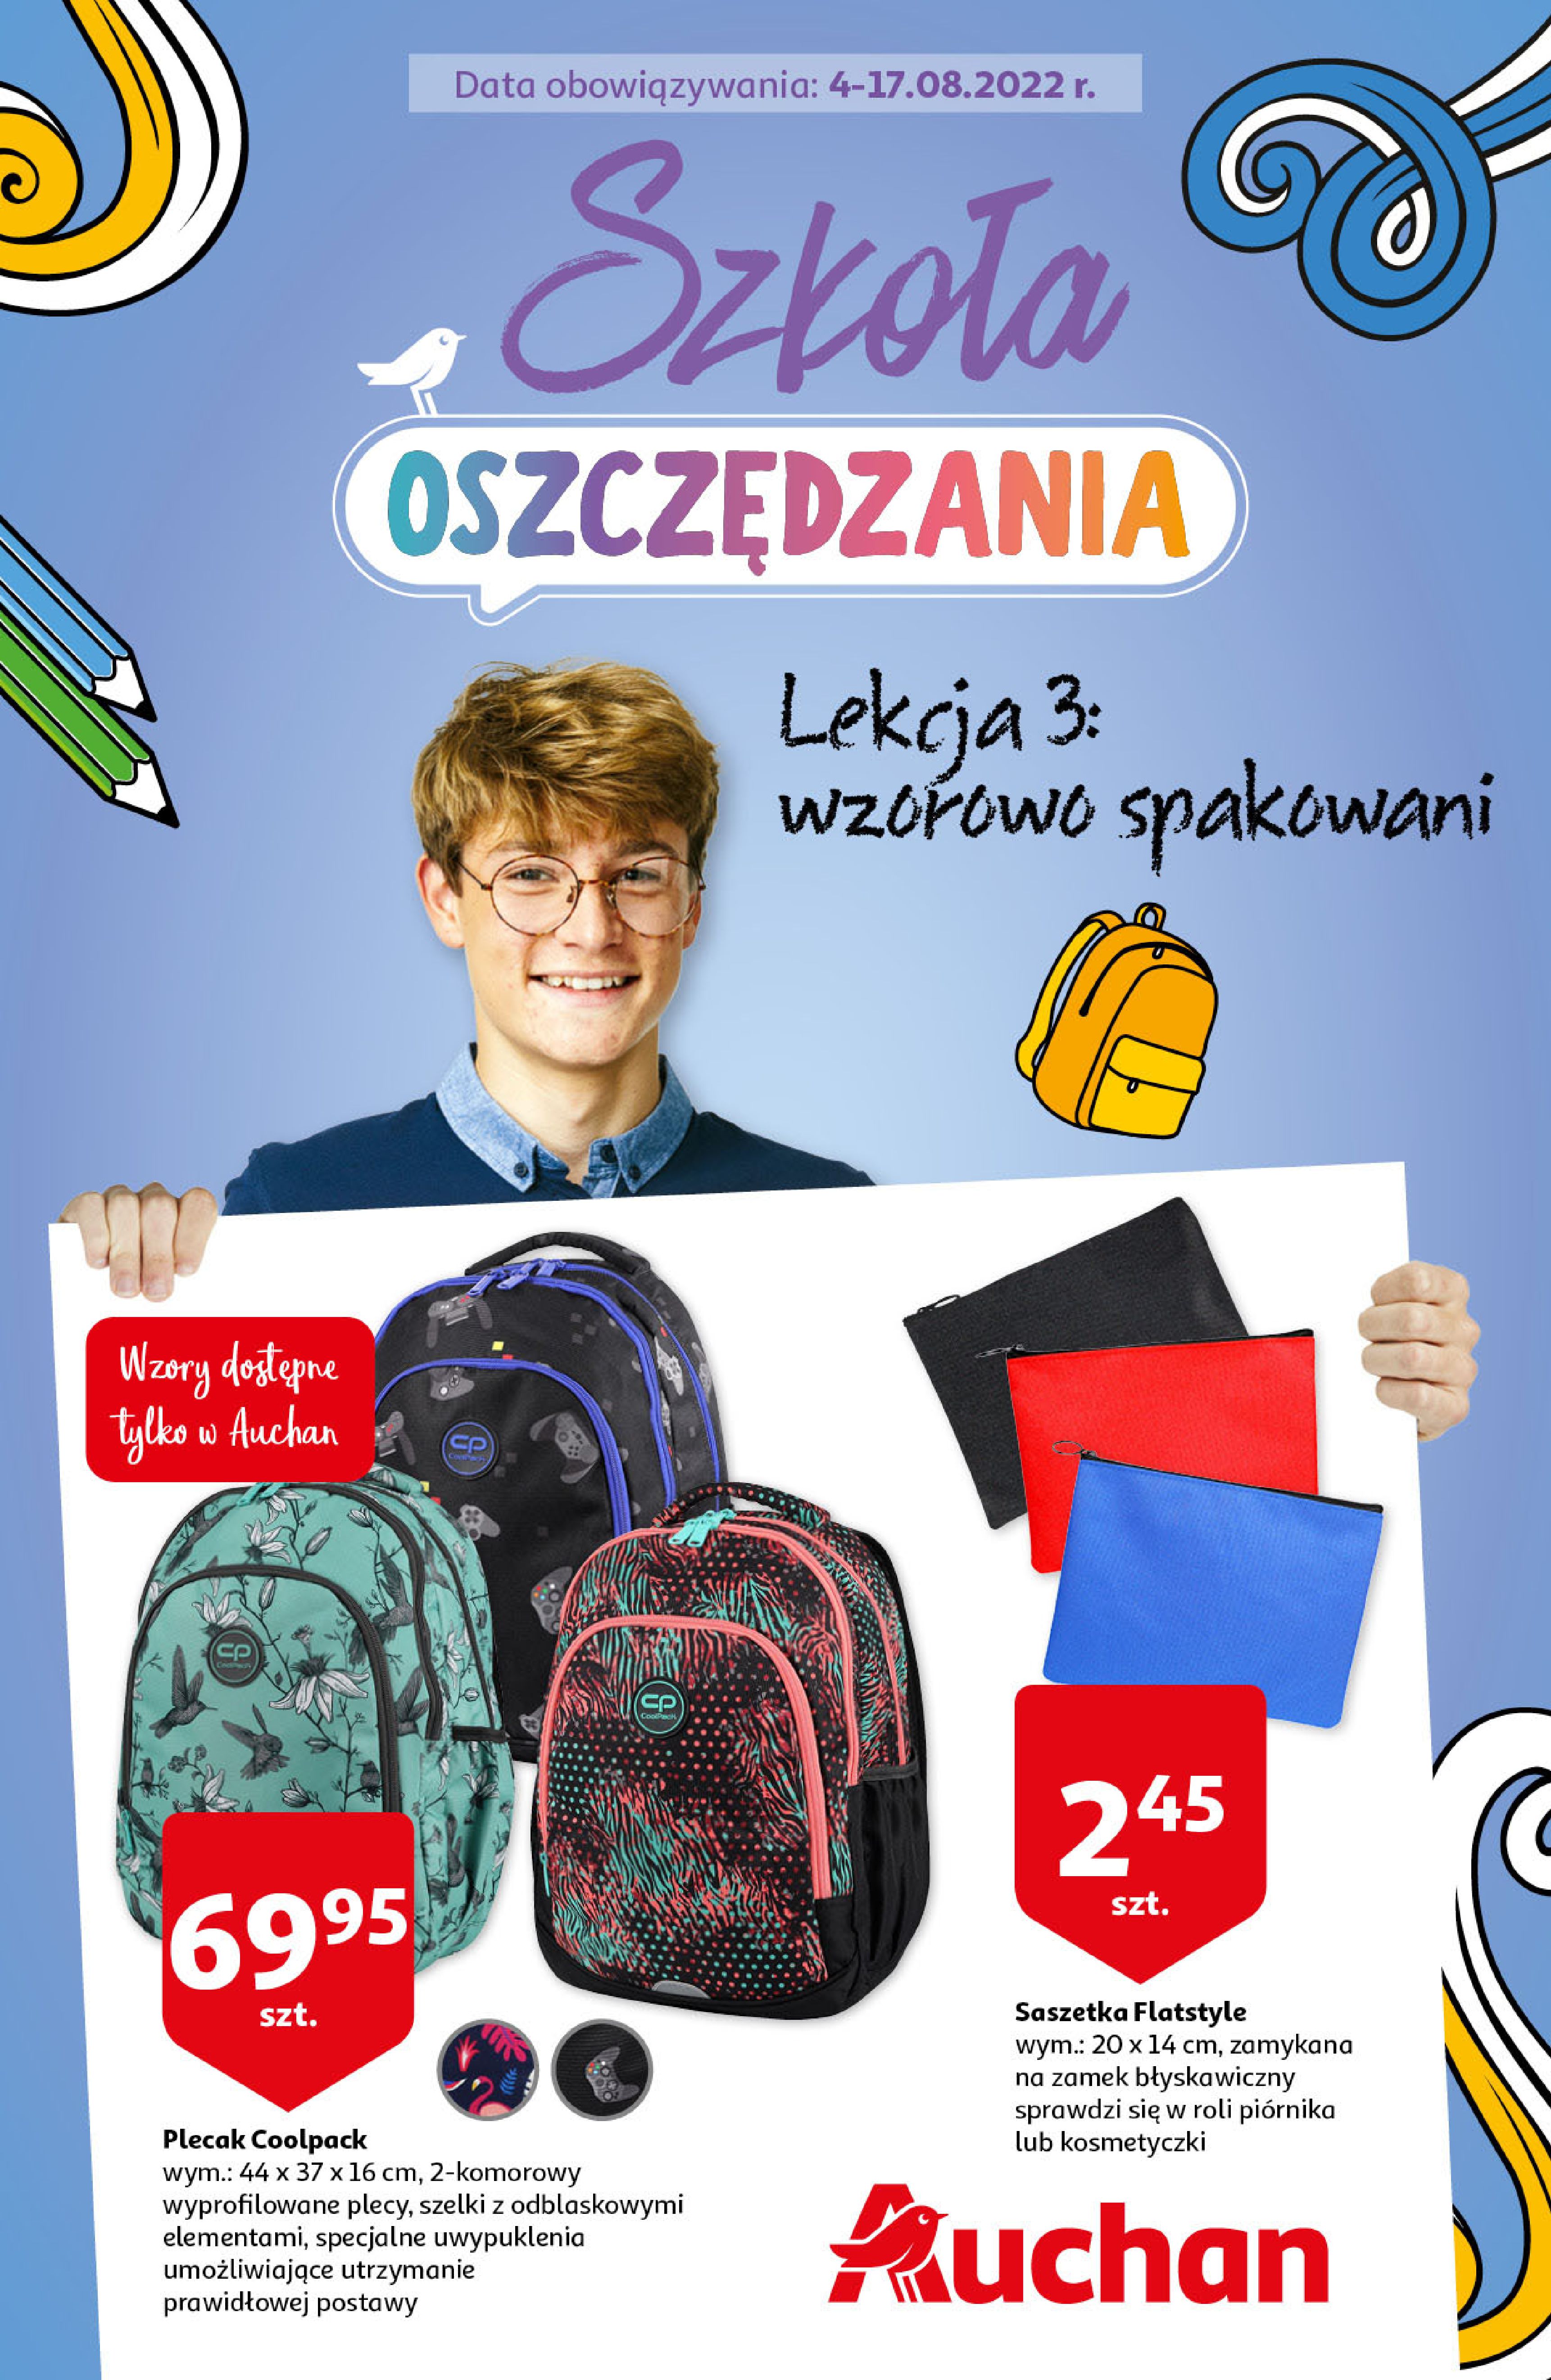 Auchan:  Gazetka Auchan - Wzorowo spakowani 03.08.2022